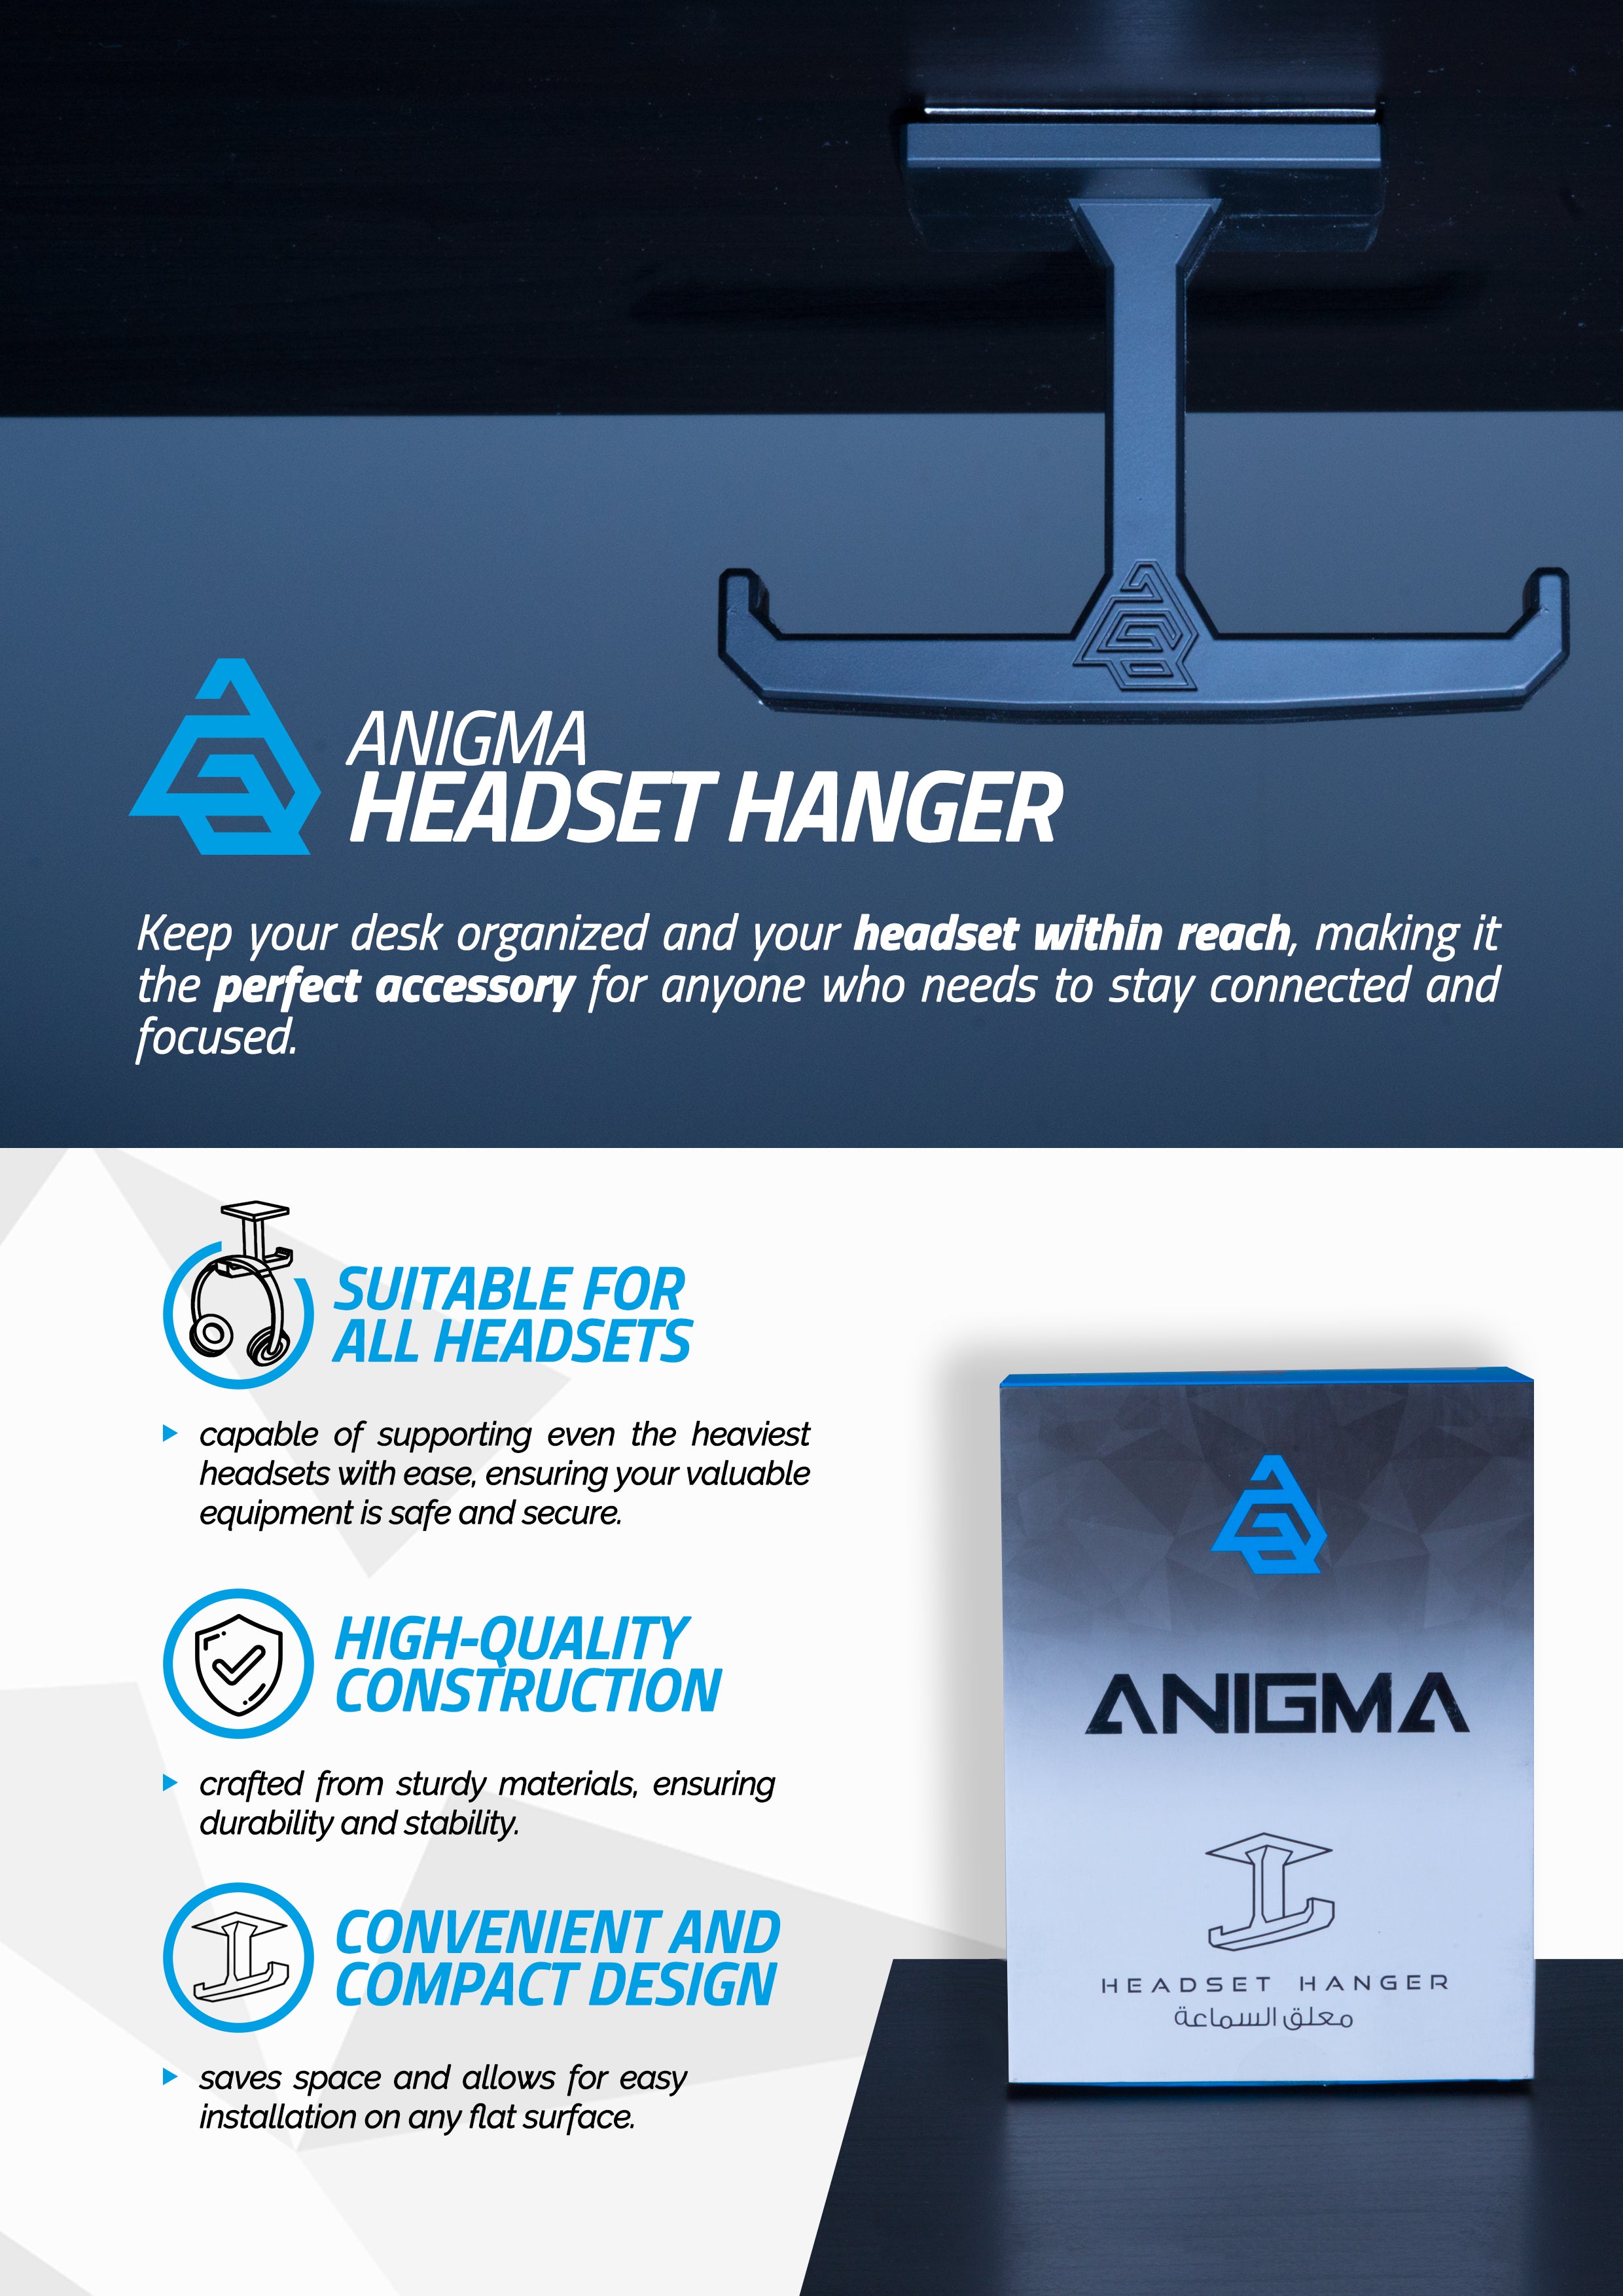 anigma-headset-hanger